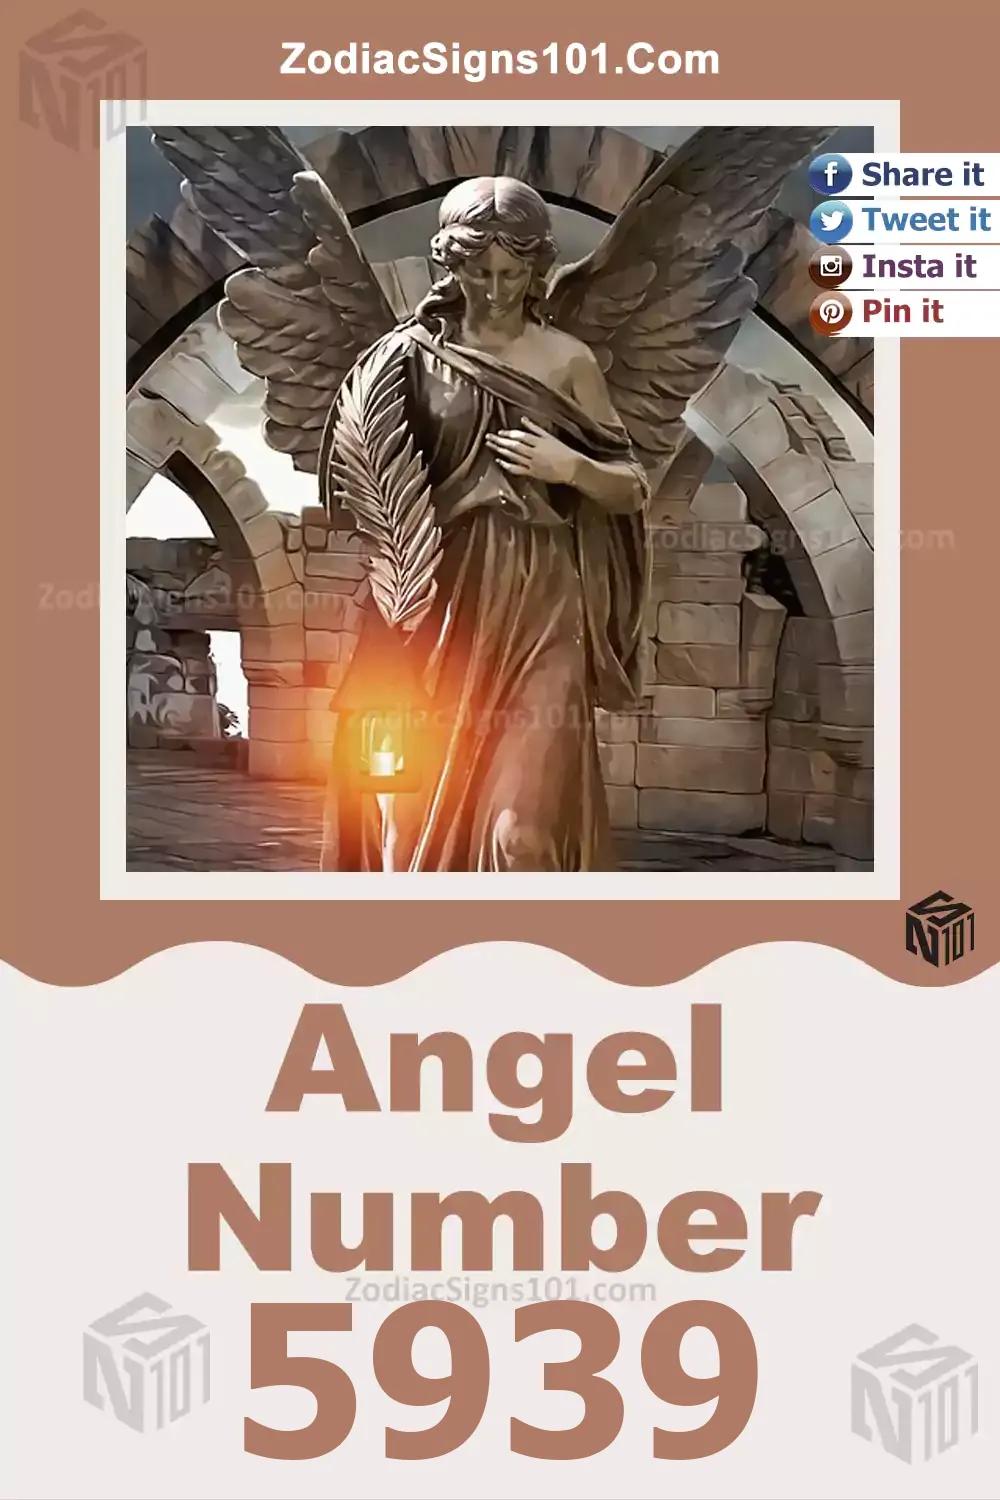 5939-Angel-Number-Meaning.jpg